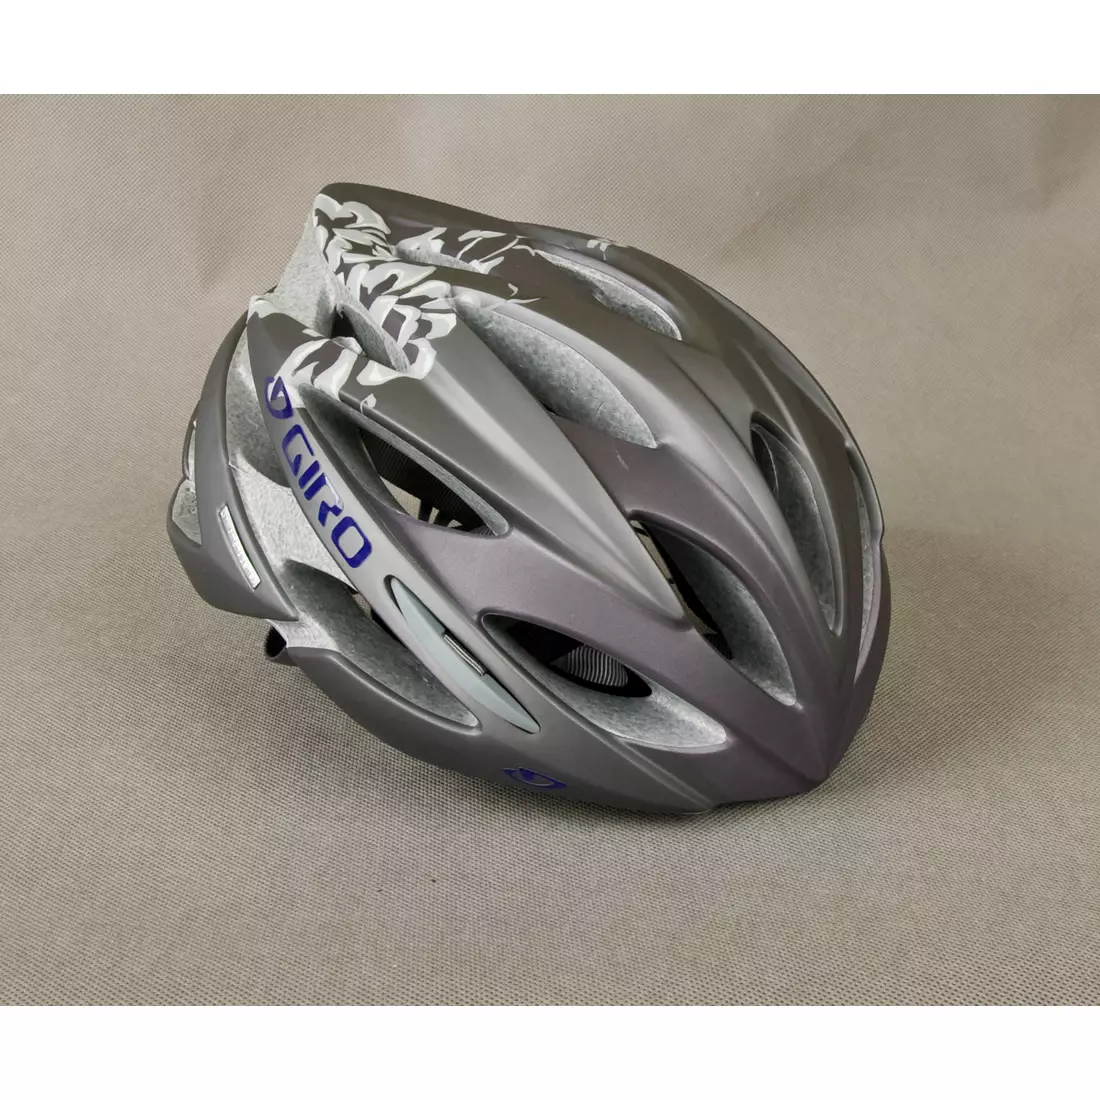 GIRO damski kask rowerowy SONNET titanium